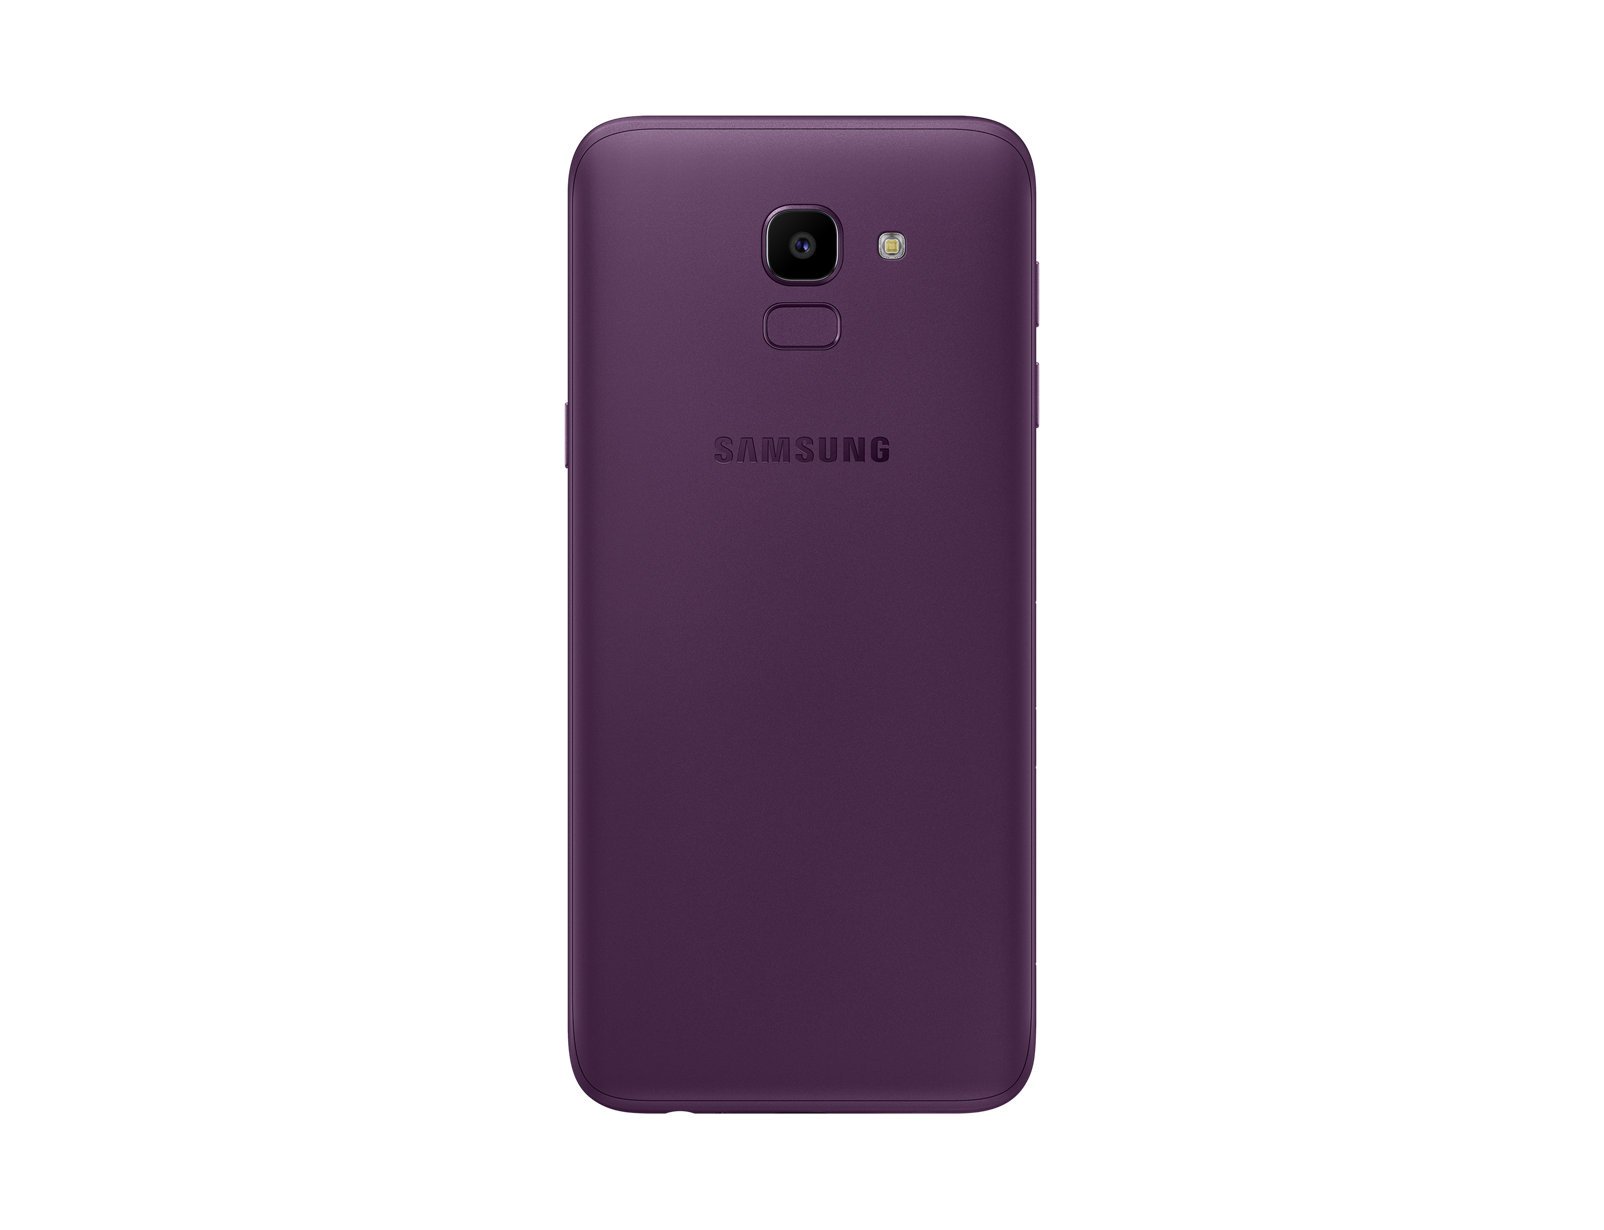 Samsung Galaxy J6 Specs Review Release Date Phonesdata